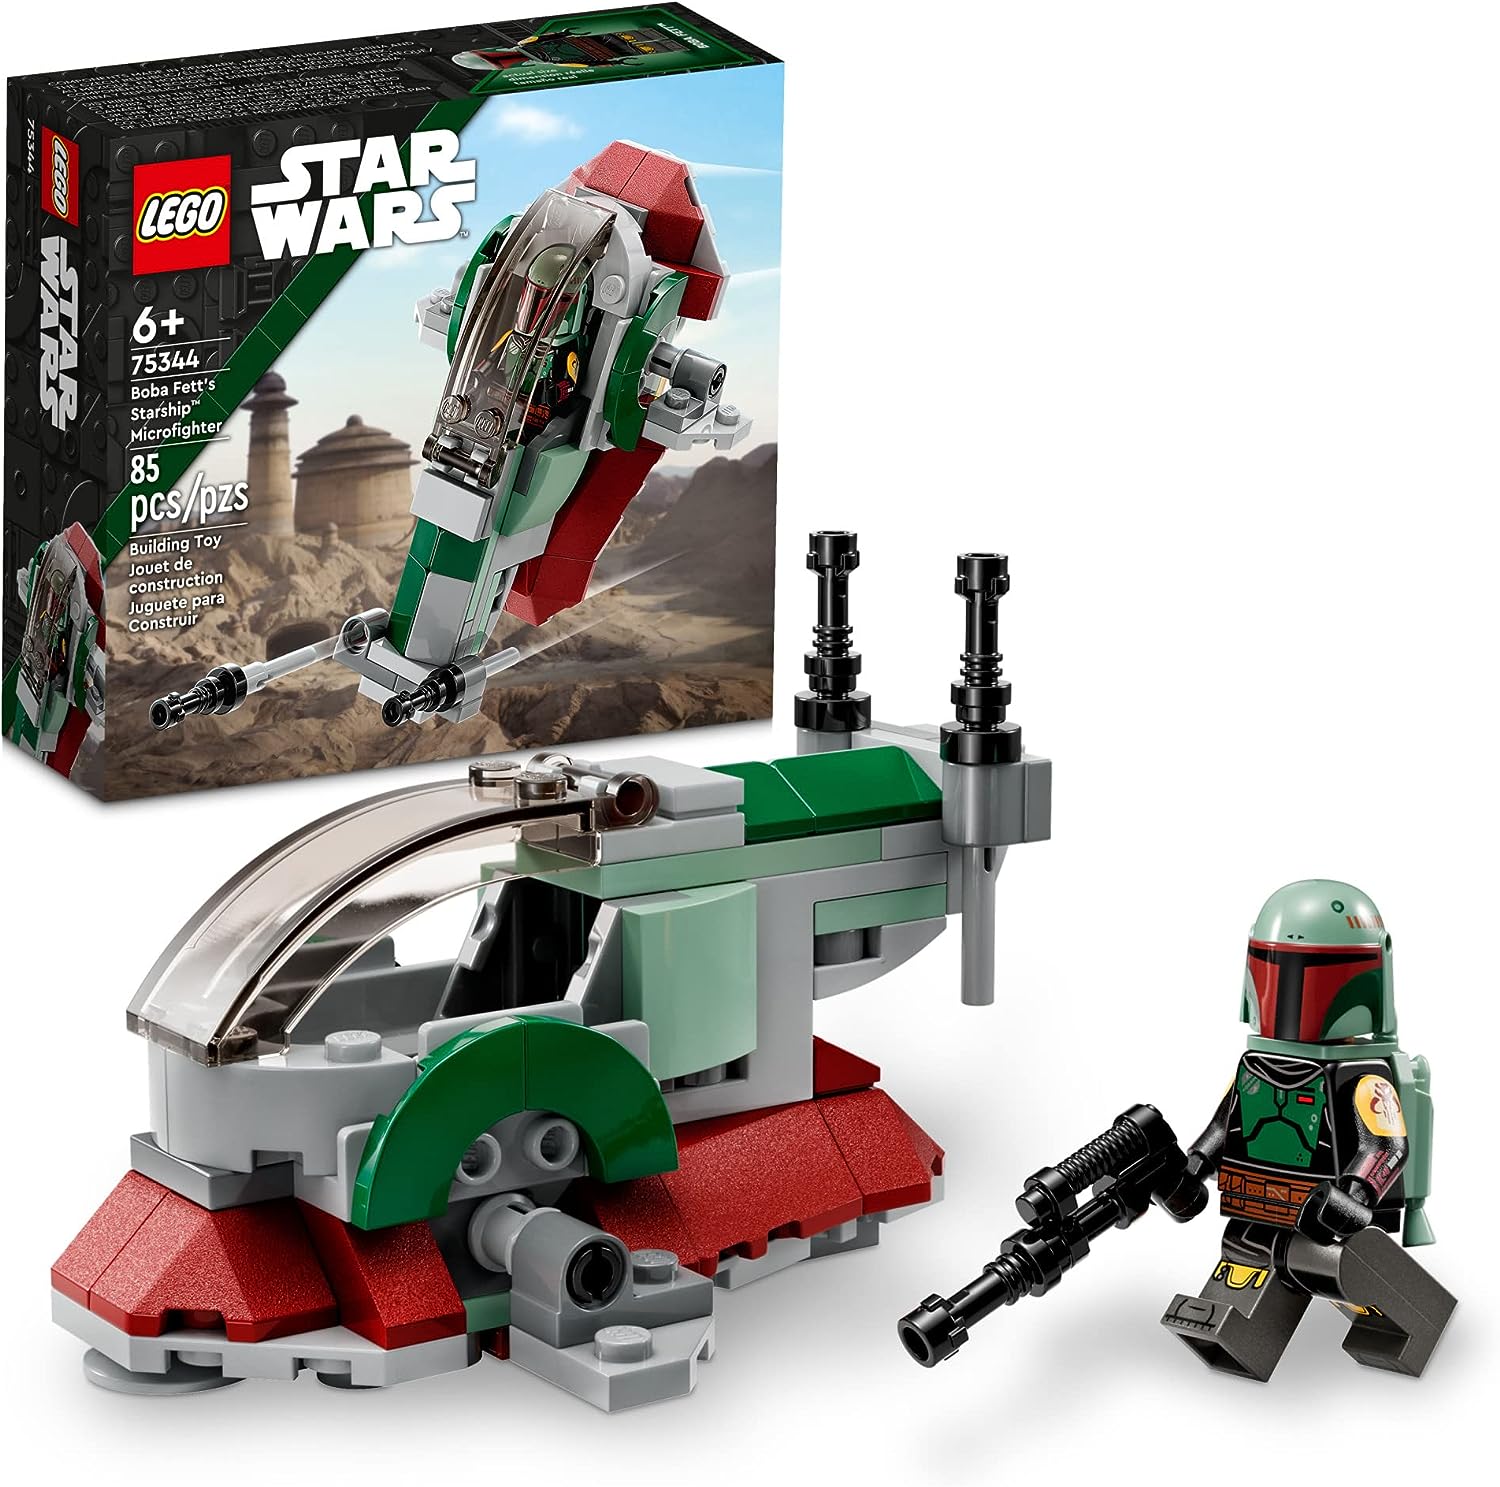 Đồ chơi LEGO Star Wars Star Wars Microfighter 75344 của Boba Fett